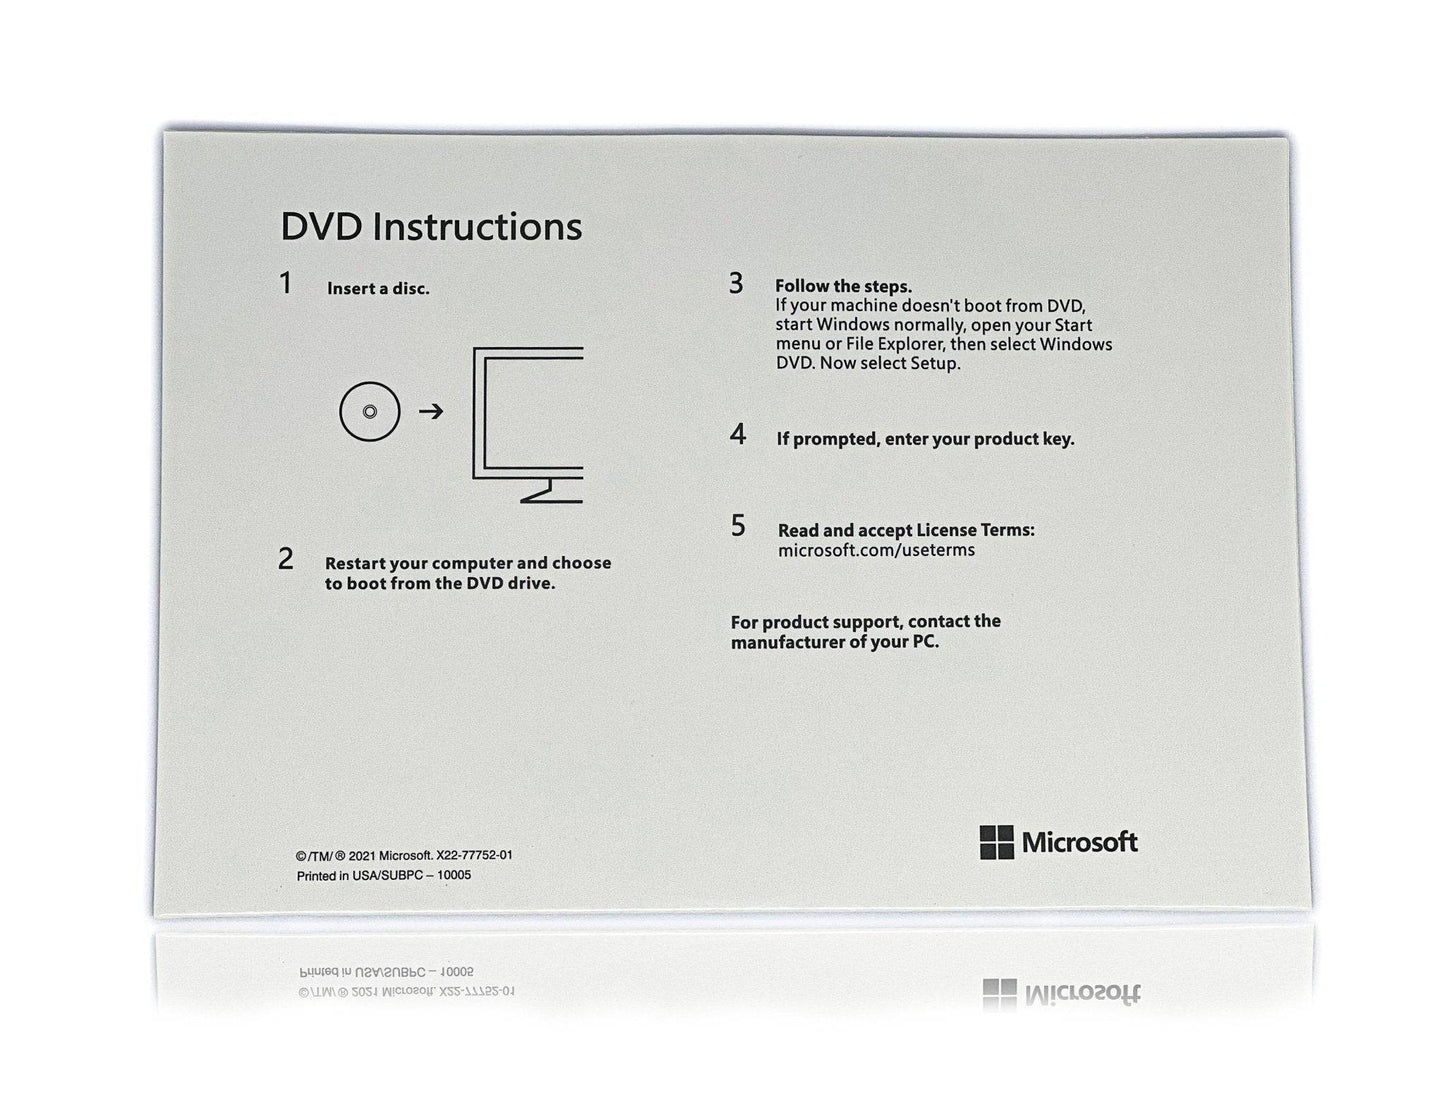 Windows 11 Home 64-bit OEM DVD with License Key for 1 PC | Full Version | Sealed Package (MPN: KW9-00632) Australian Stock - INFINITE-ITECH